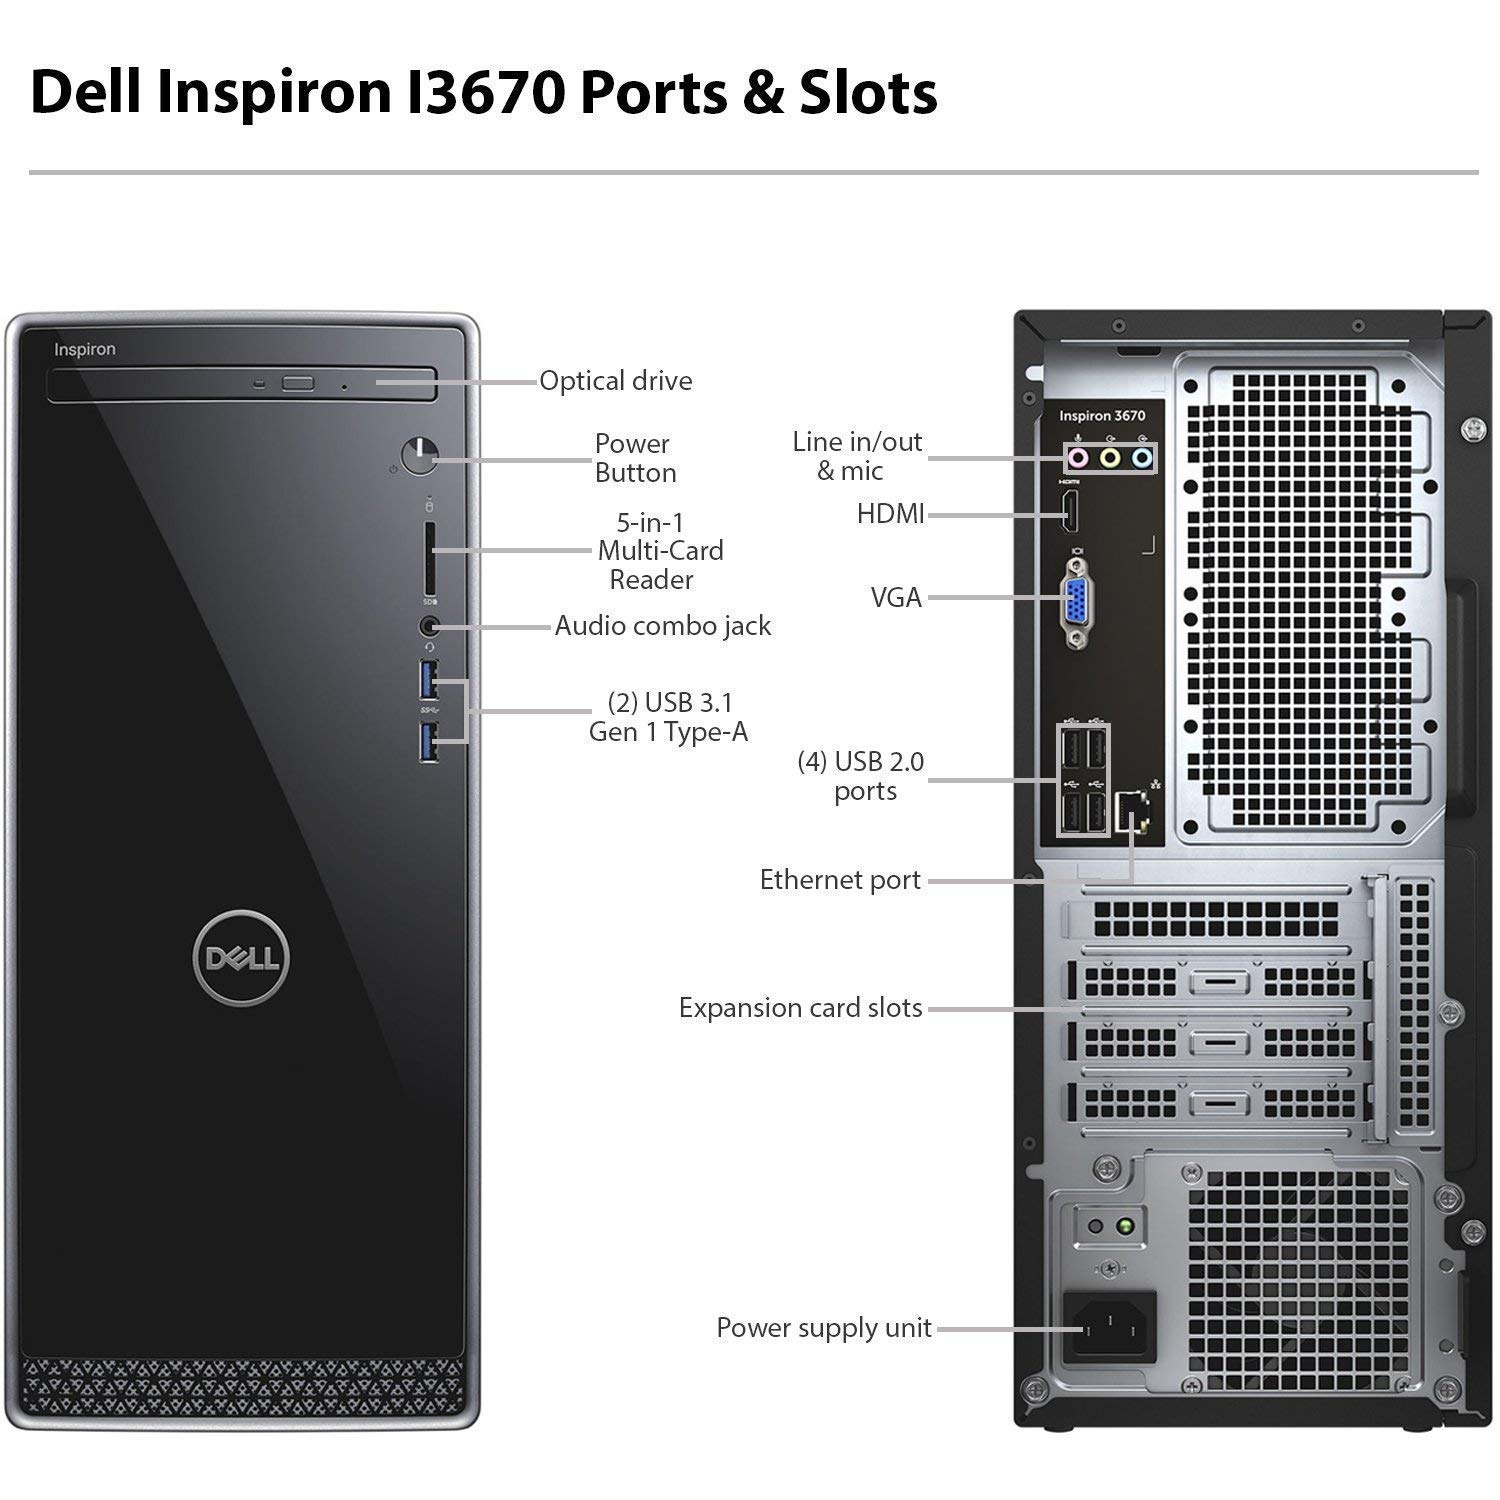 2019 Newest Dell Inspiron Premium Desktop: Latest 9th gen Intel Six-Core i5-9400, 12GB Ram, 128GB SSD + 1TB HDD Dual Drive, WiFi, Bluetooth, DVDRW, HDMI, VGA, USB Keyboard and Mouse, Windows 10 Home